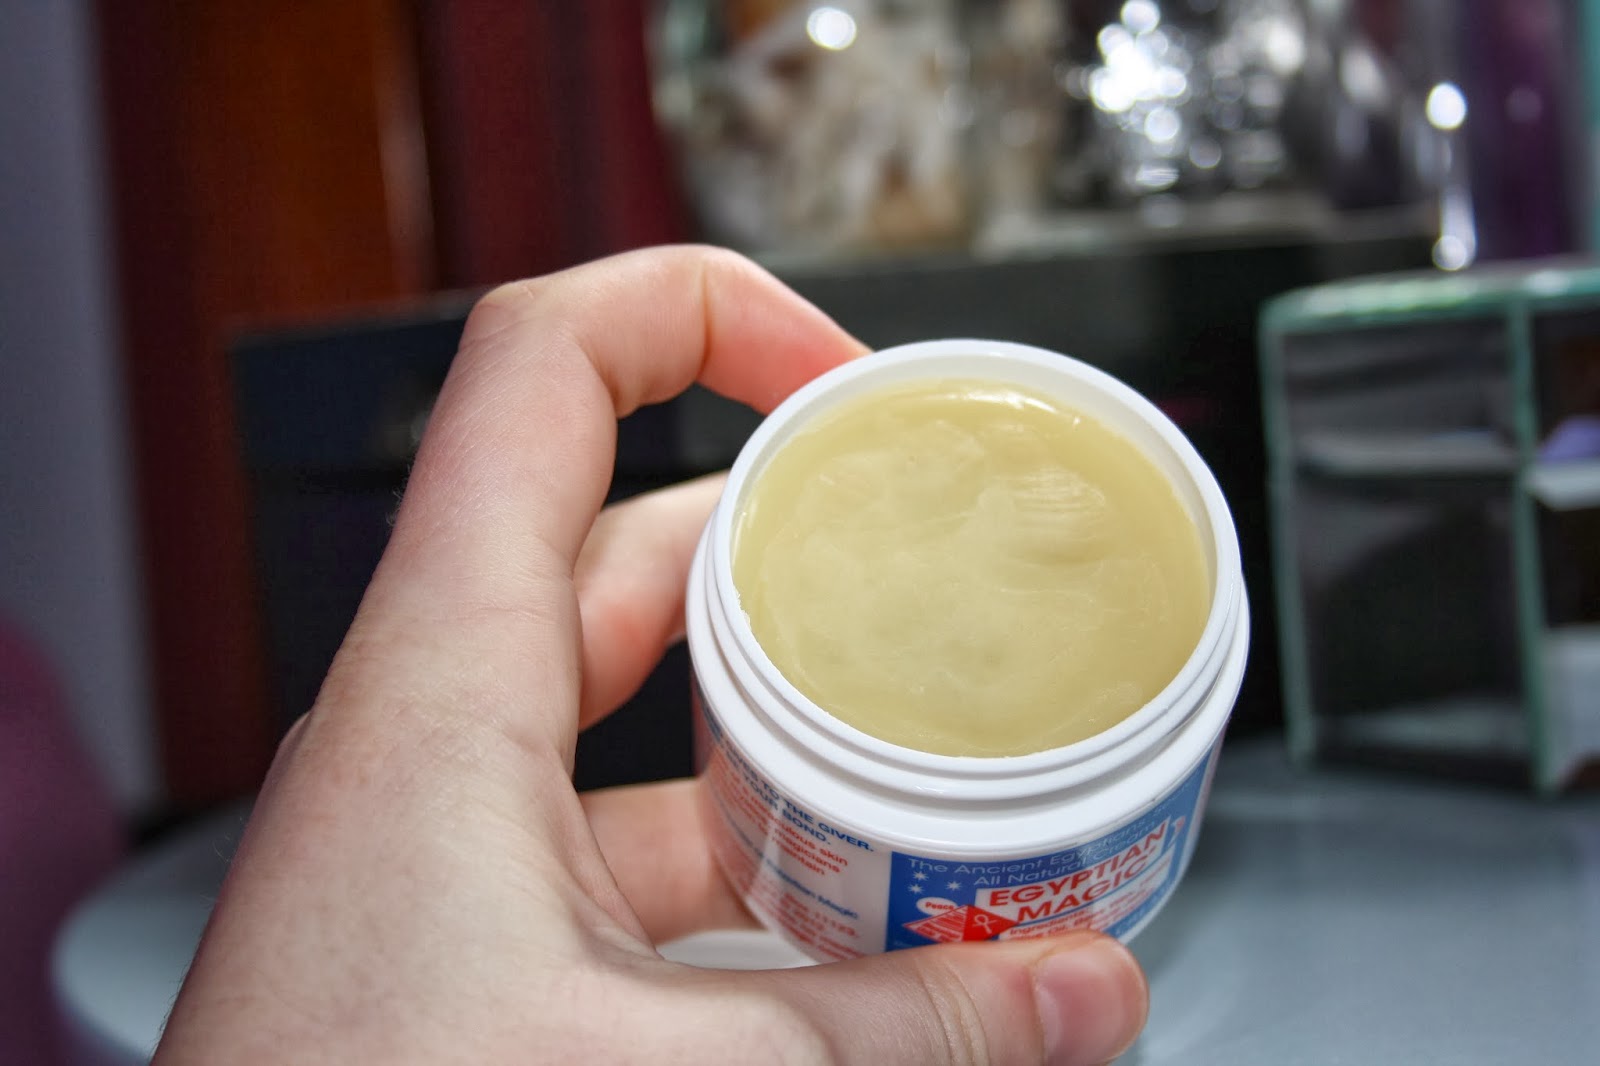 Egyptian Magic Multi-Purpose Cream